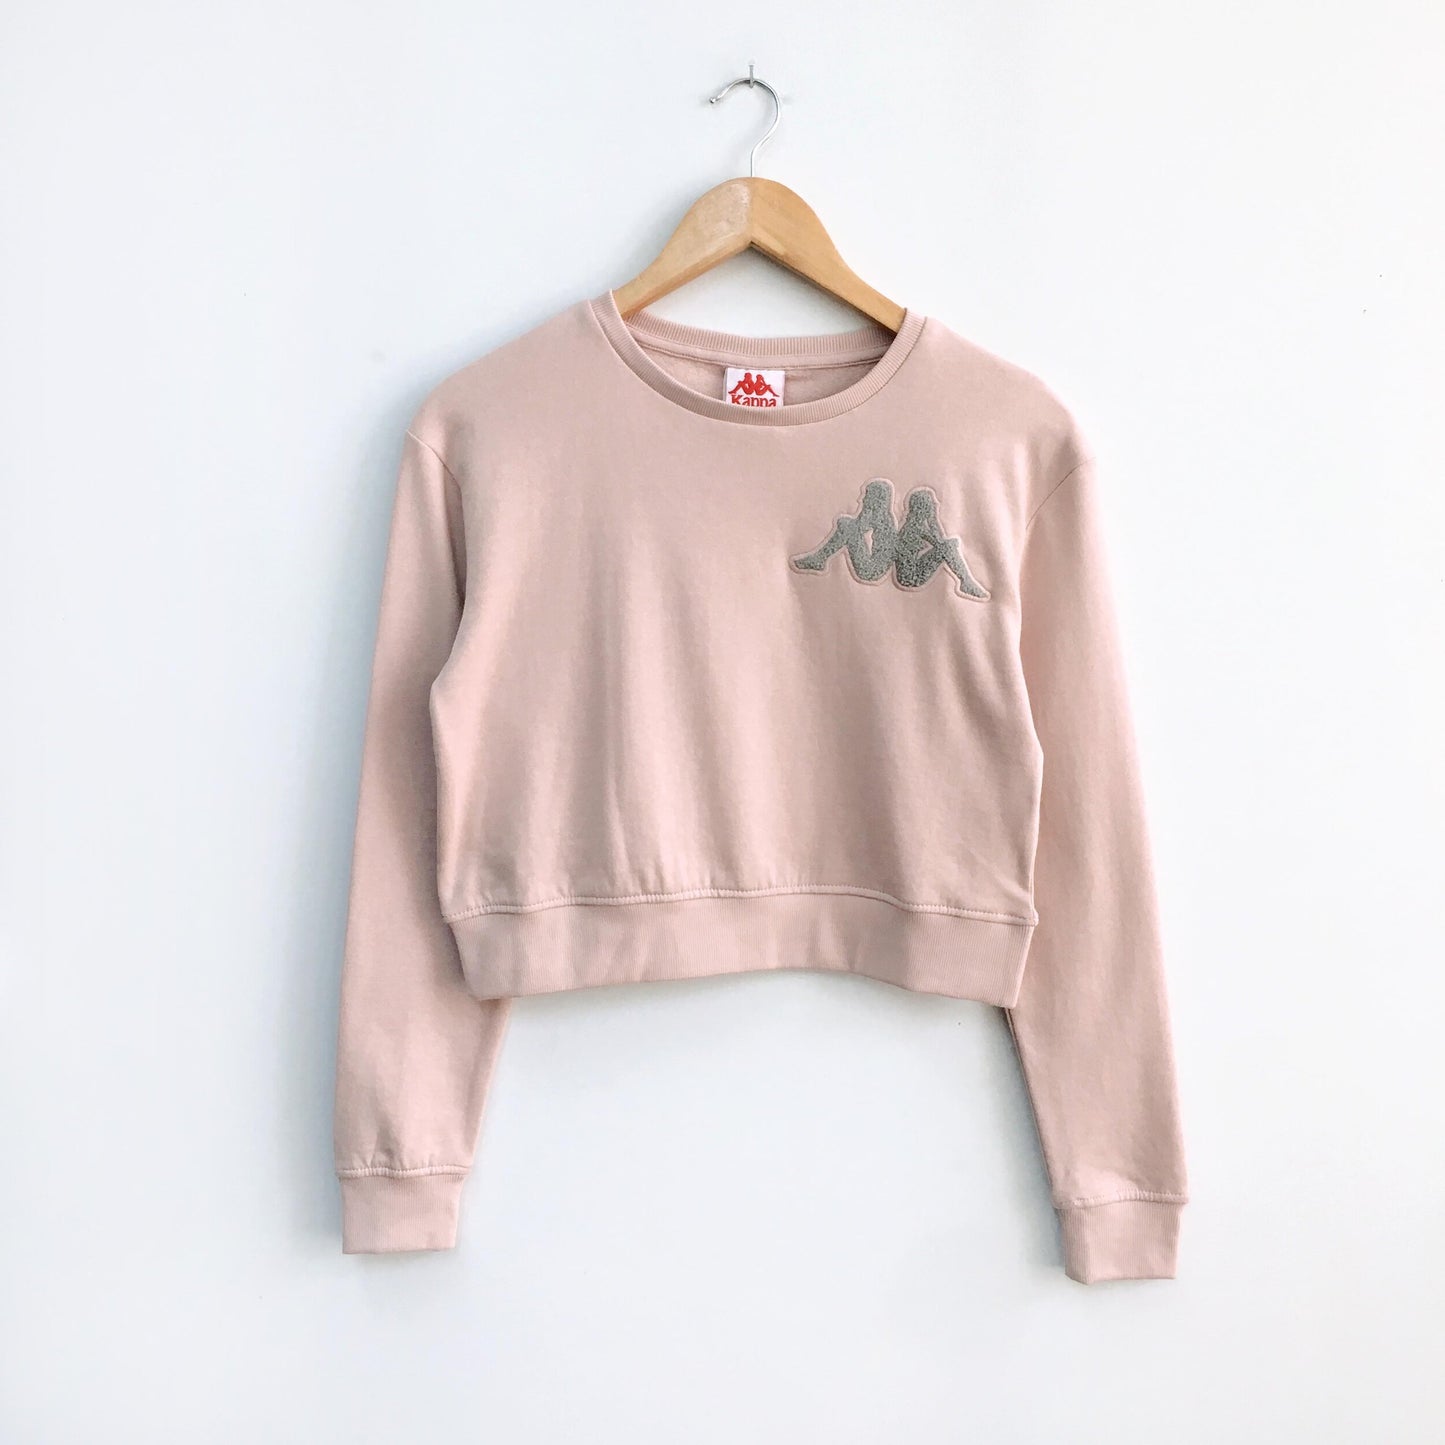 NWT Kappa Crop Sweatshirt - size xs